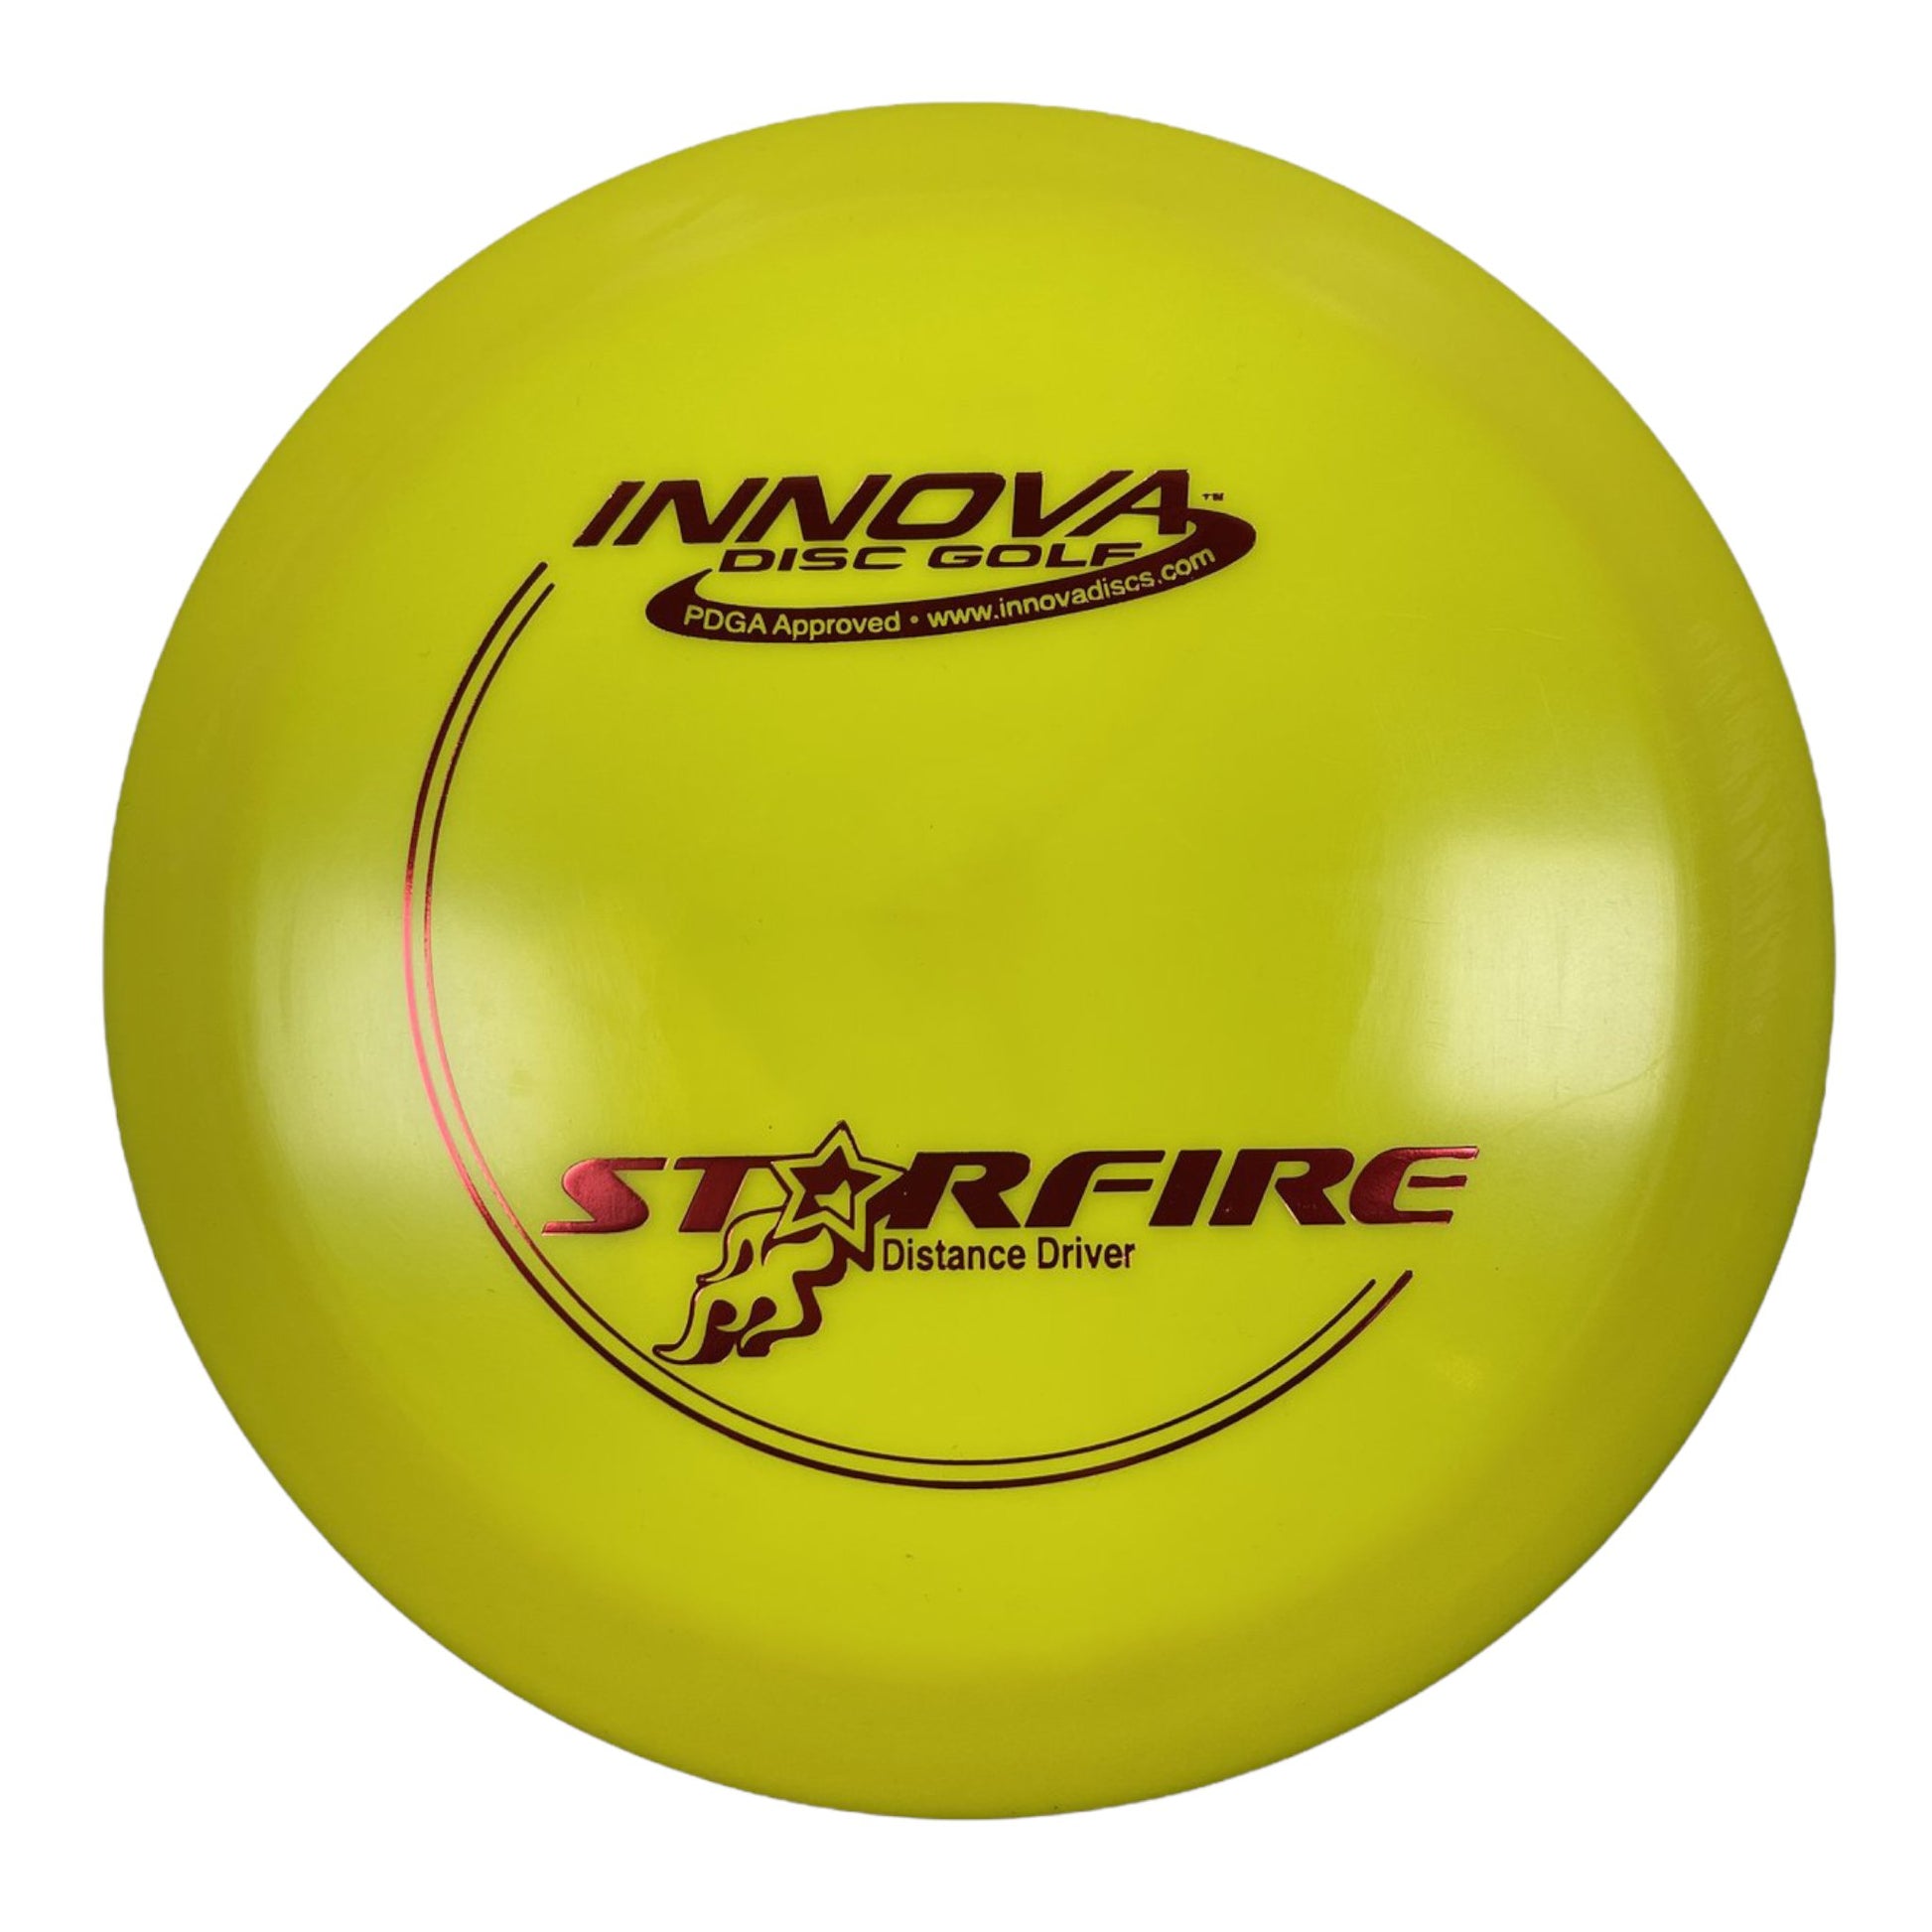 Innova Champion Discs Starfire | DX | Yellow/Red 150g Disc Golf